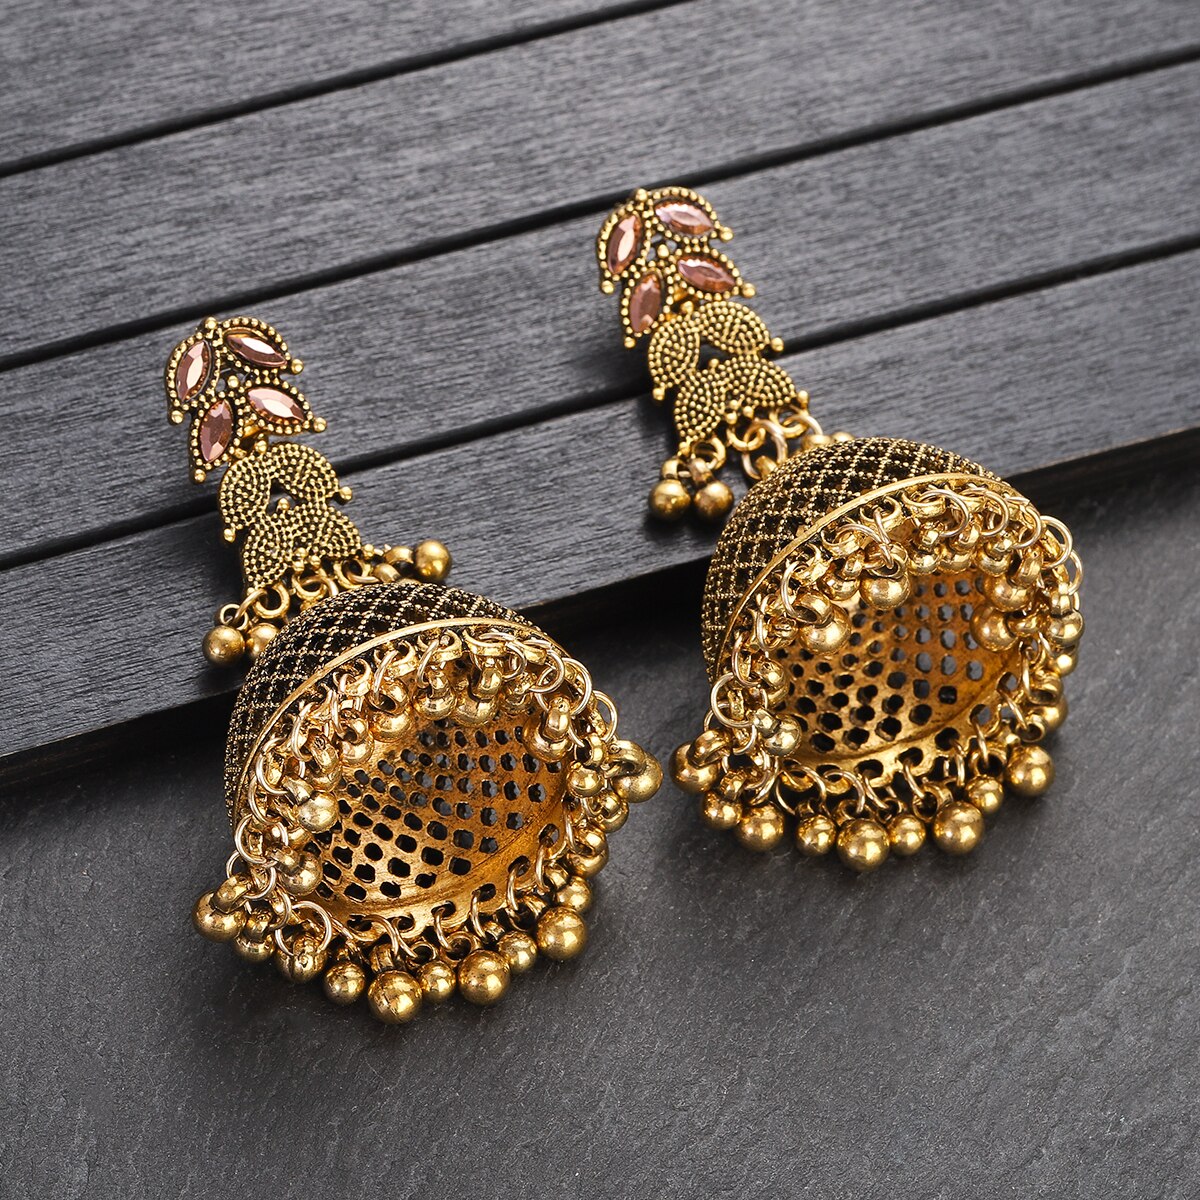 Ethnic-Big-Gold-Color-Indian-Jhumka-Earrings-For-Women-Pendient-Retro-Bells-Tibetan-Earrings-Oorbell-1005004736828927-2